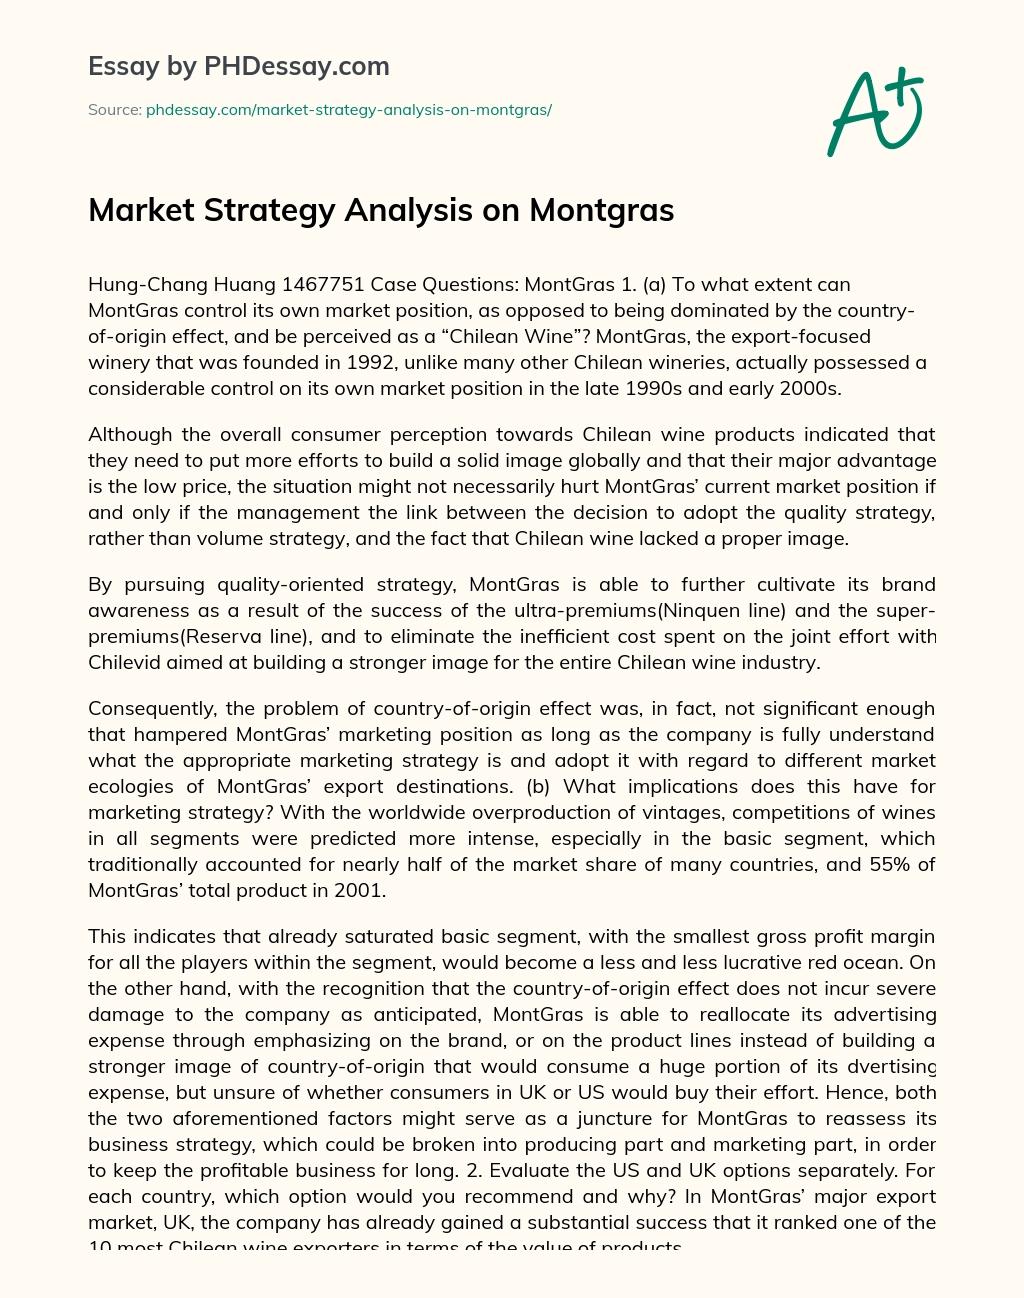 Market Strategy Analysis on Montgras essay